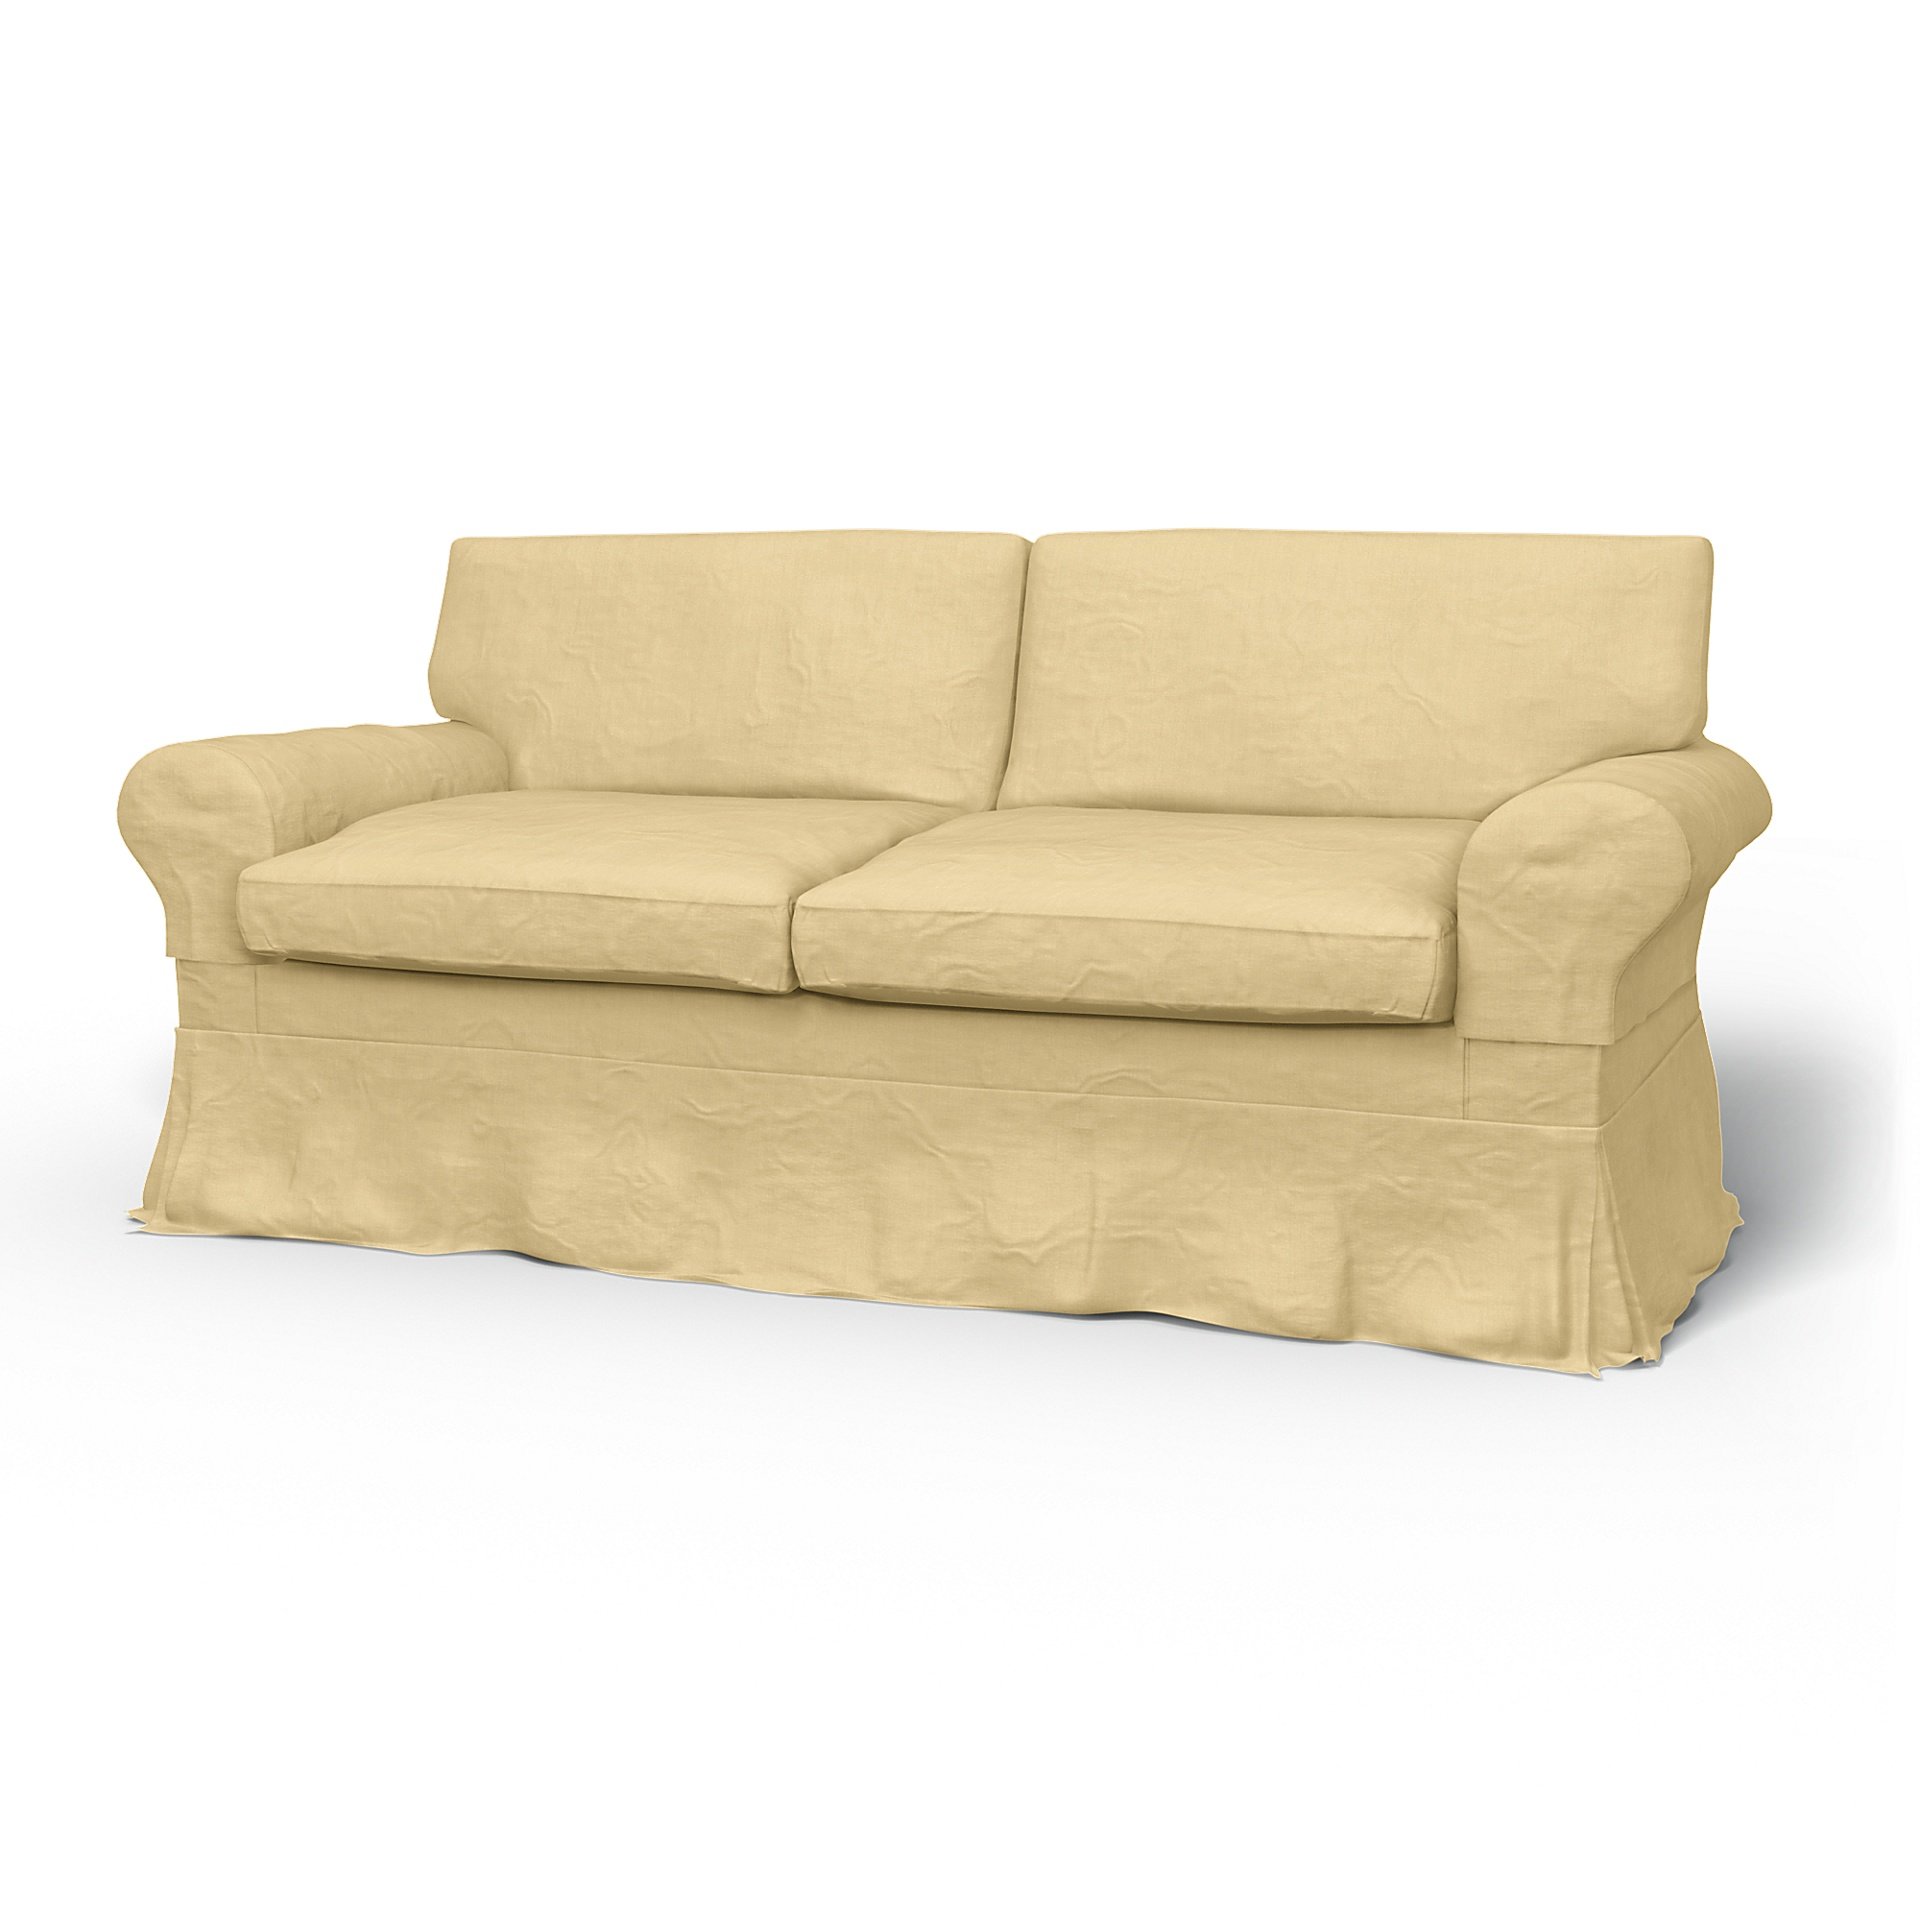 IKEA - Ektorp 2 Seater Sofa Bed Cover, Straw Yellow, Linen - Bemz